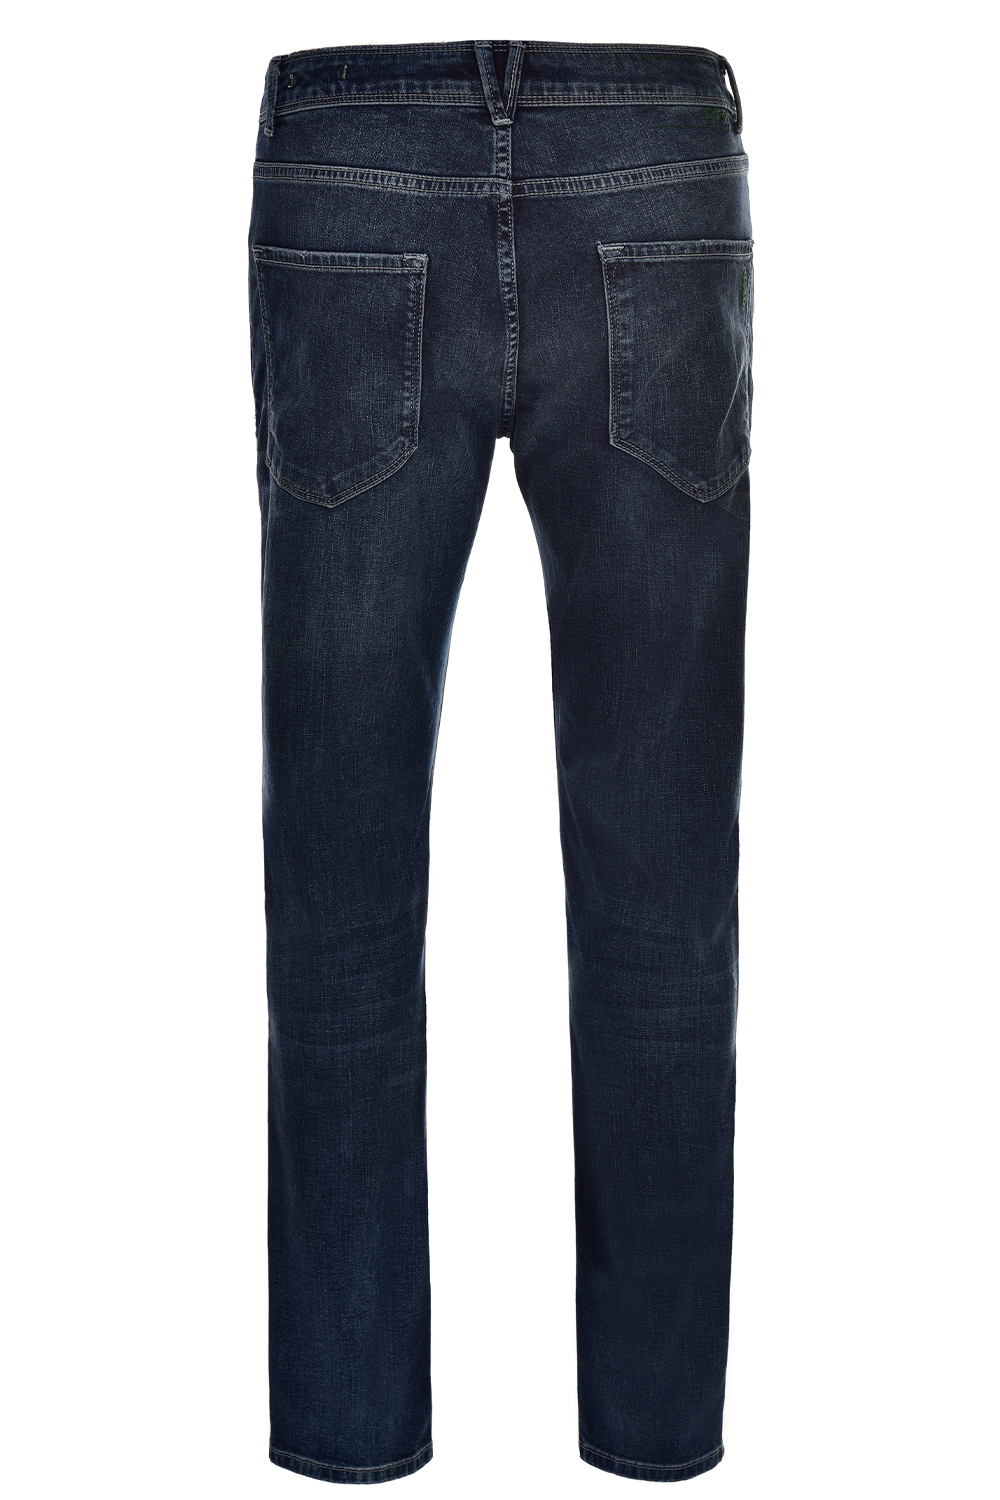 Jeans P.GRAX slim fit - Fontanili Abbigliamento Shopping Online